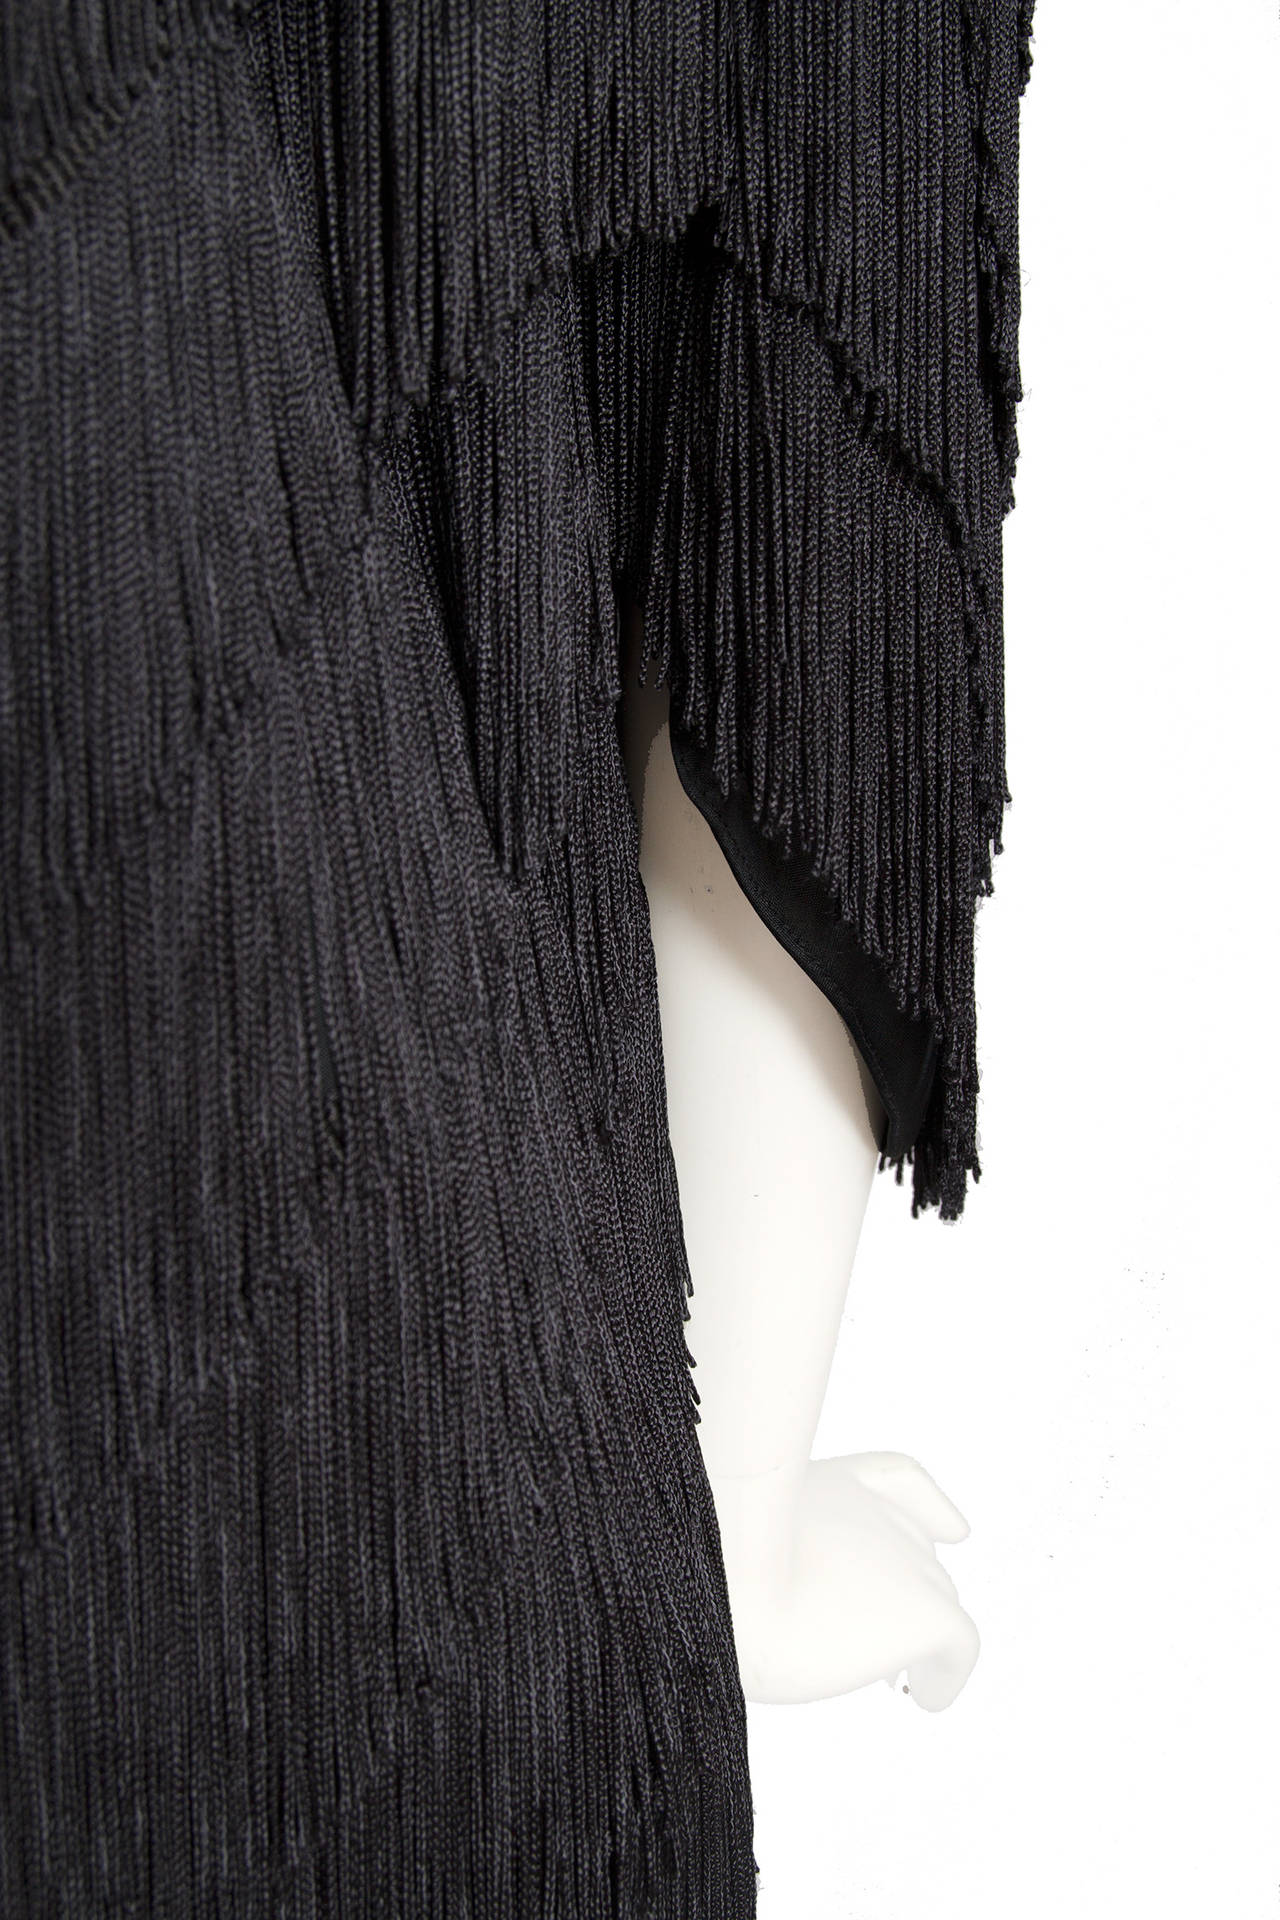 1980s Norma Kamali Black Fringe Dress 1